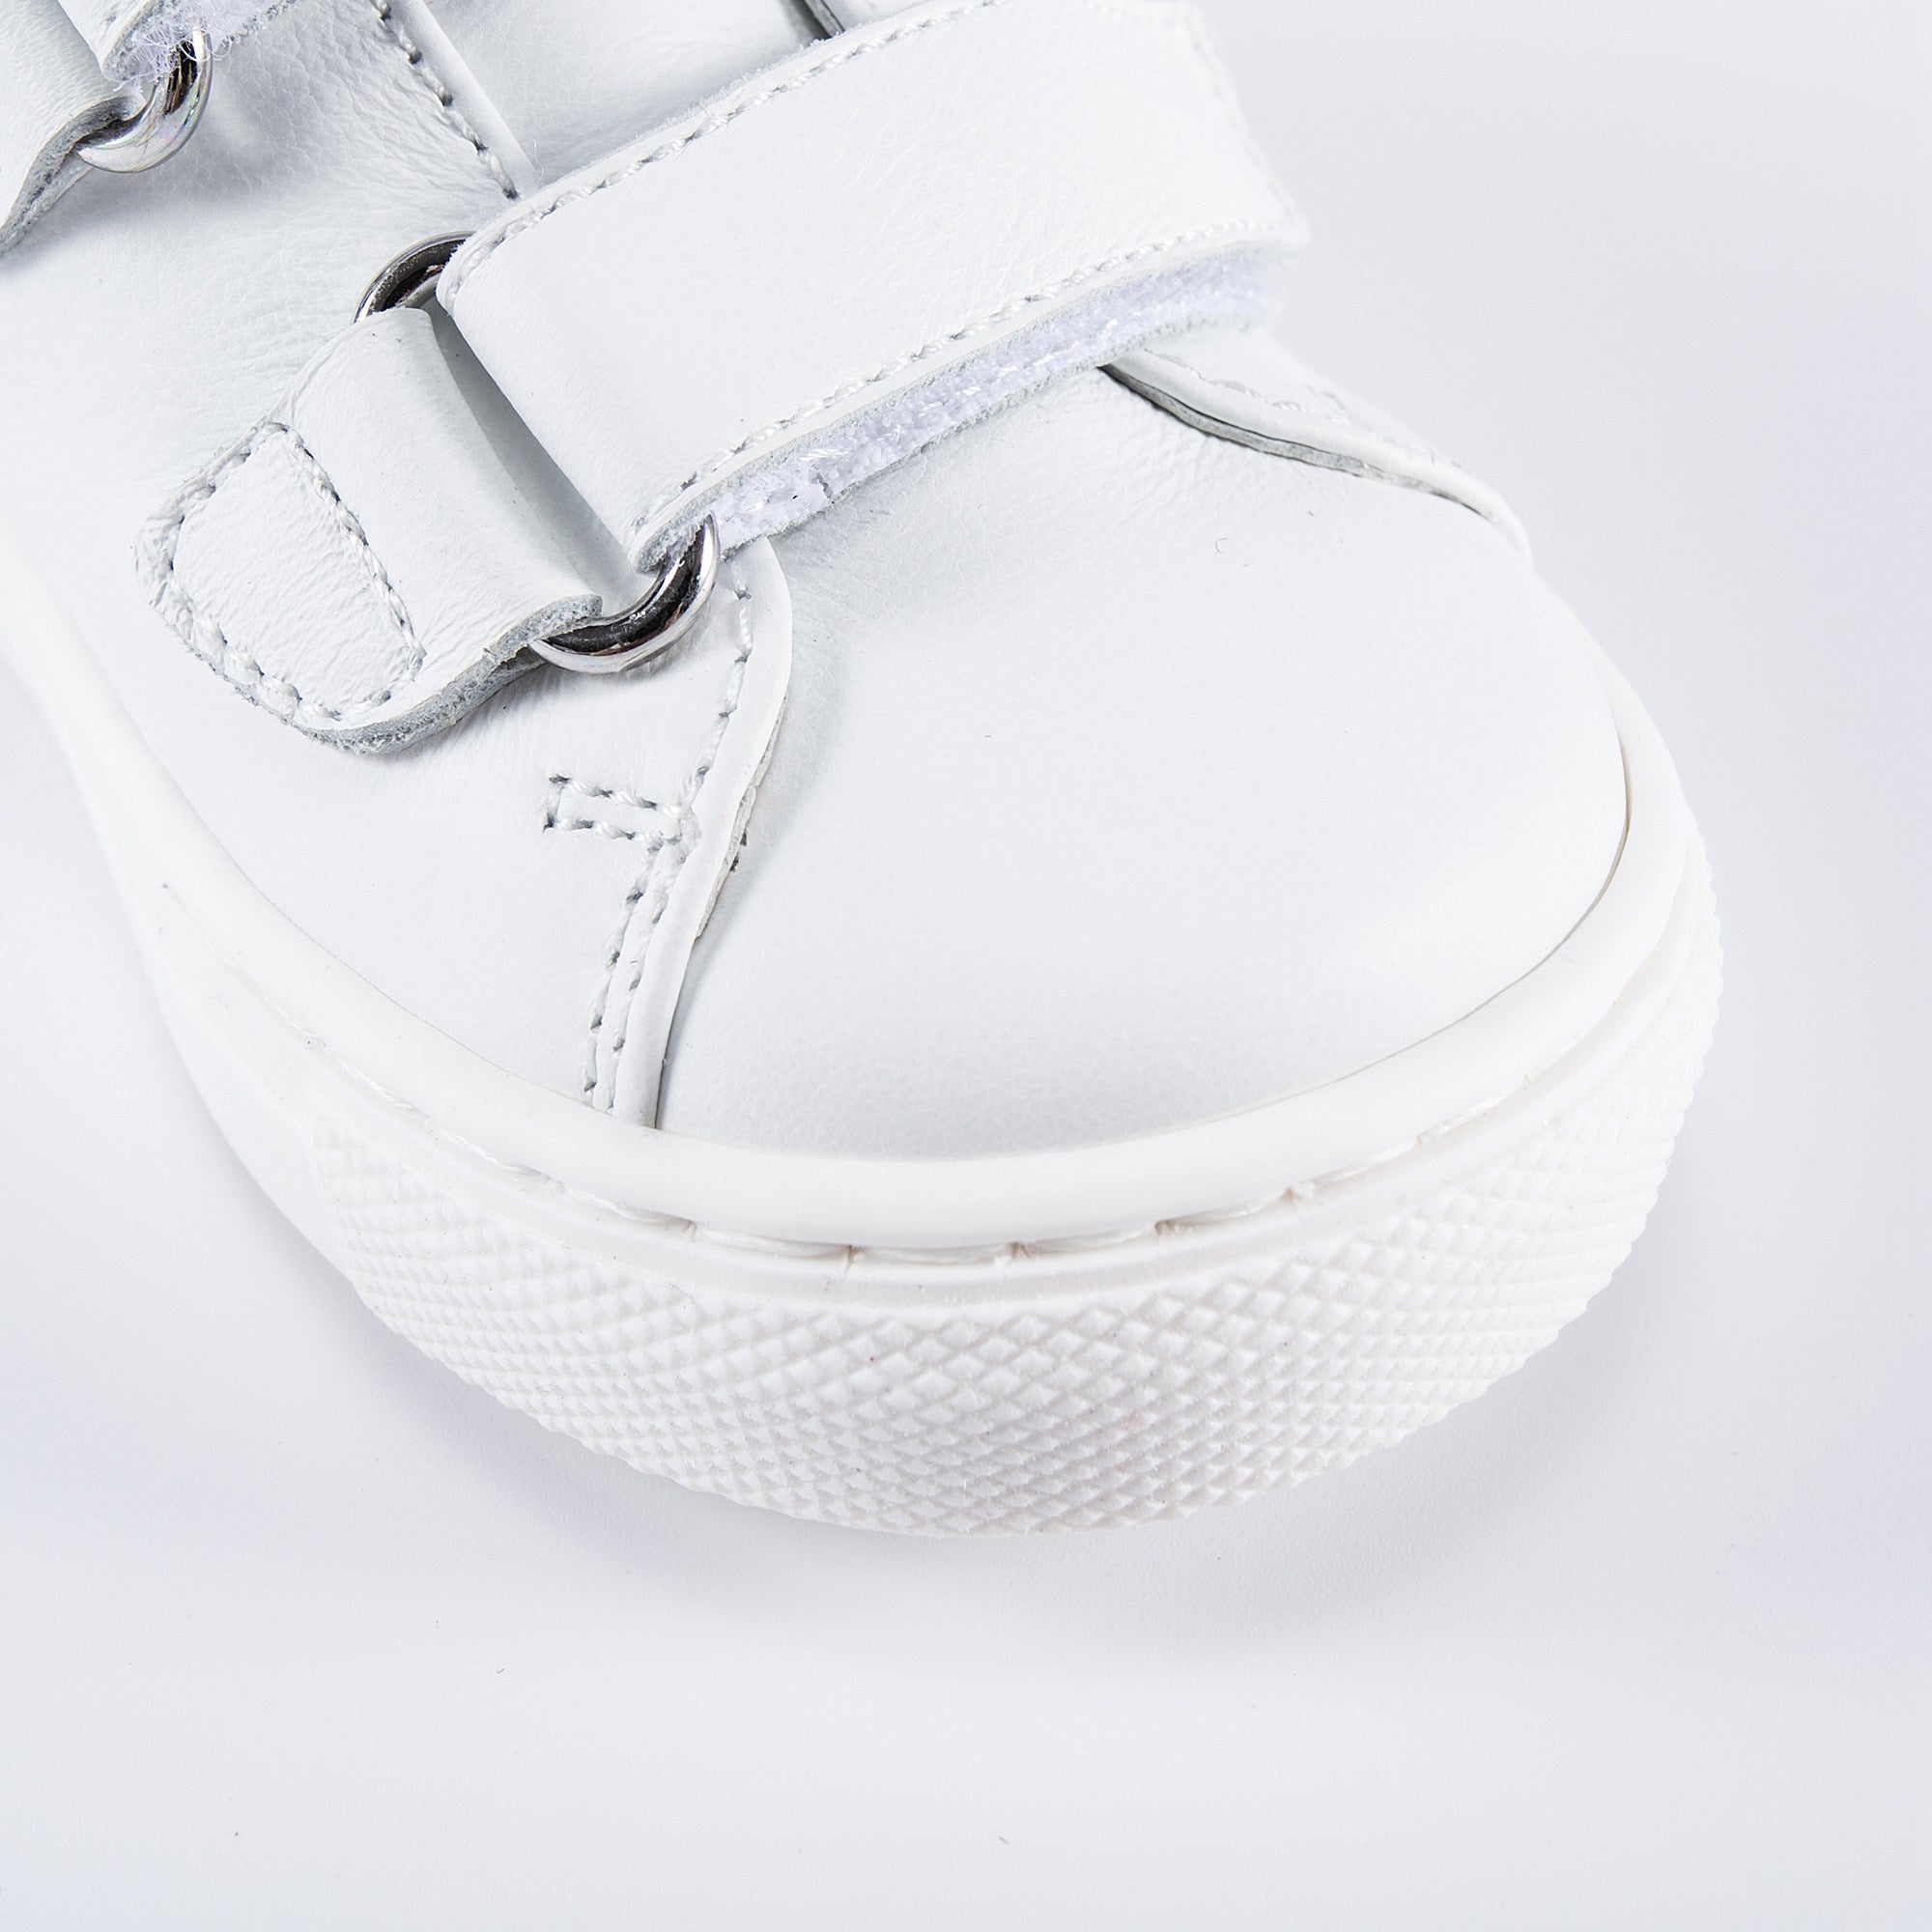 Boys & Girls White Teddy Sneakers